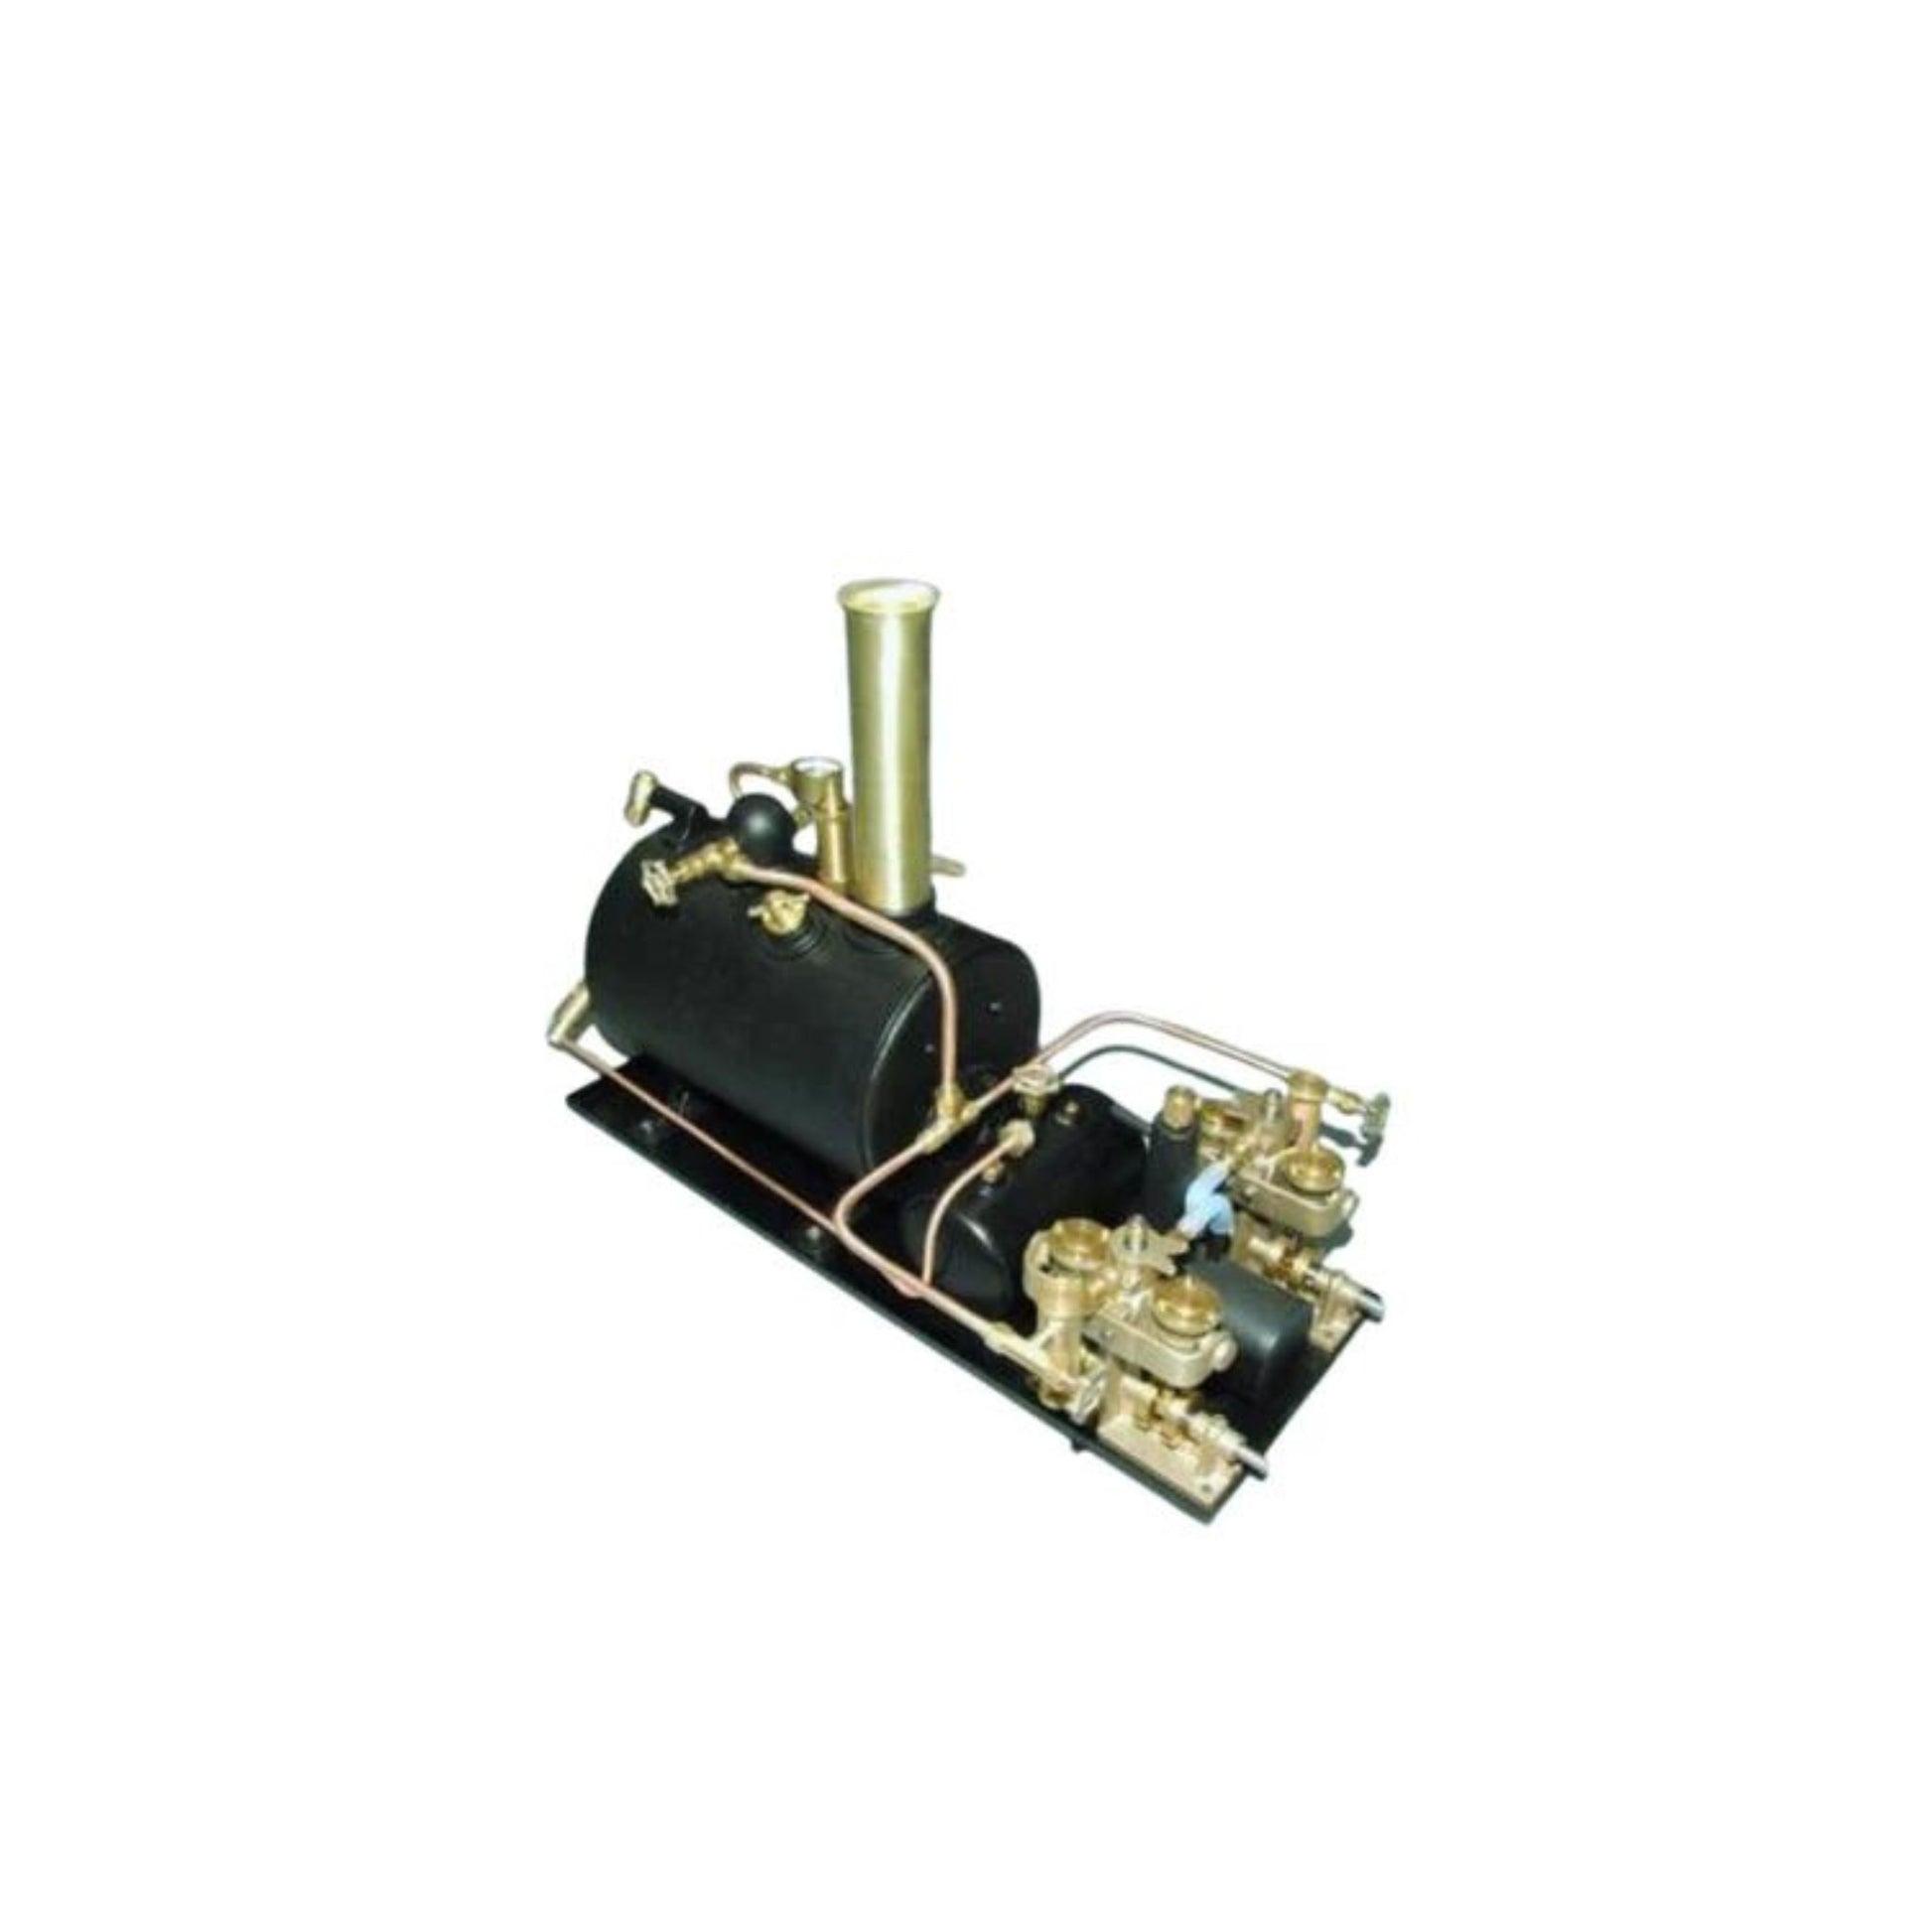  Caldercraft Imara  Marie Fellling  Resolve Twin Screw model  Steam Plant Assembly Kit Complete